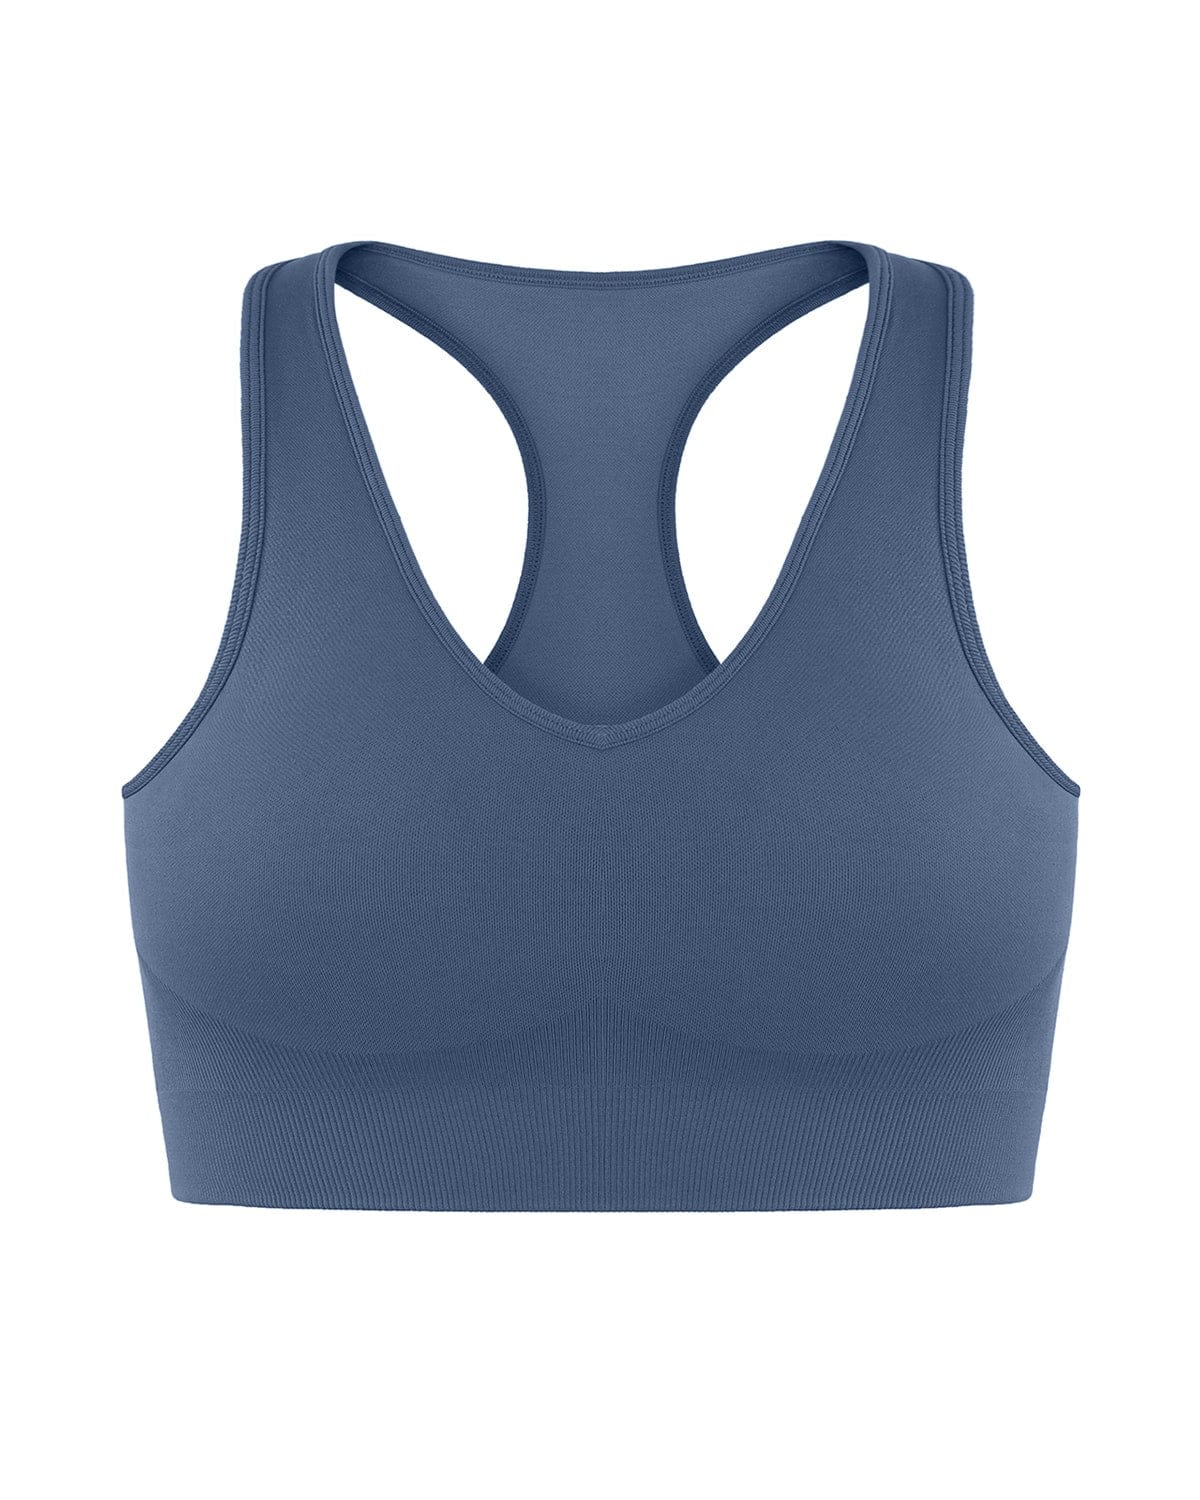 PrettyCat Grey Solid Polyester Sports Bra For Women (PC-SB-6048)